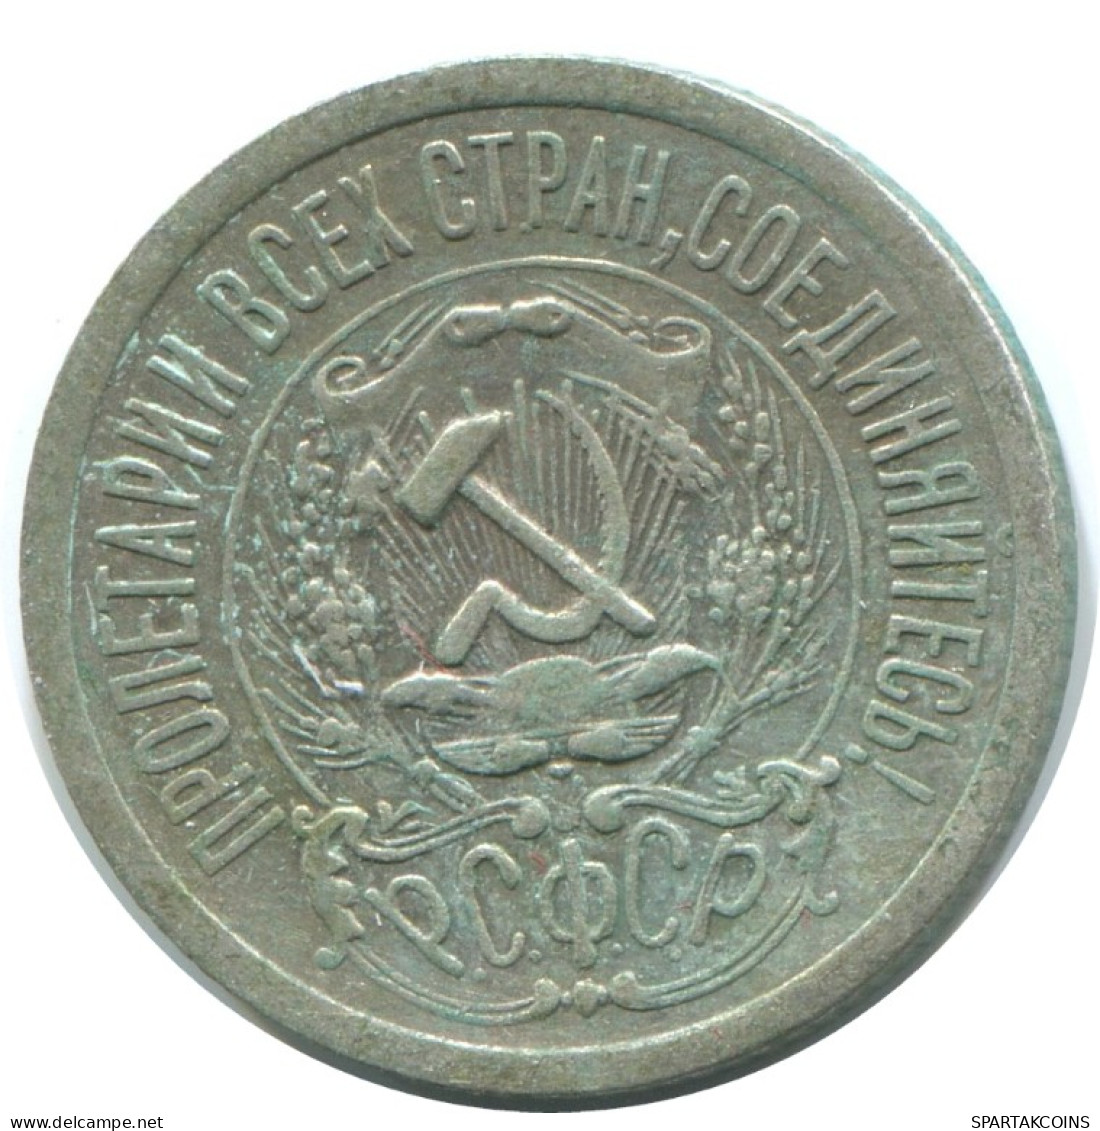 15 KOPEKS 1923 RUSSIA RSFSR SILVER Coin HIGH GRADE #AF037.4.U.A - Russia